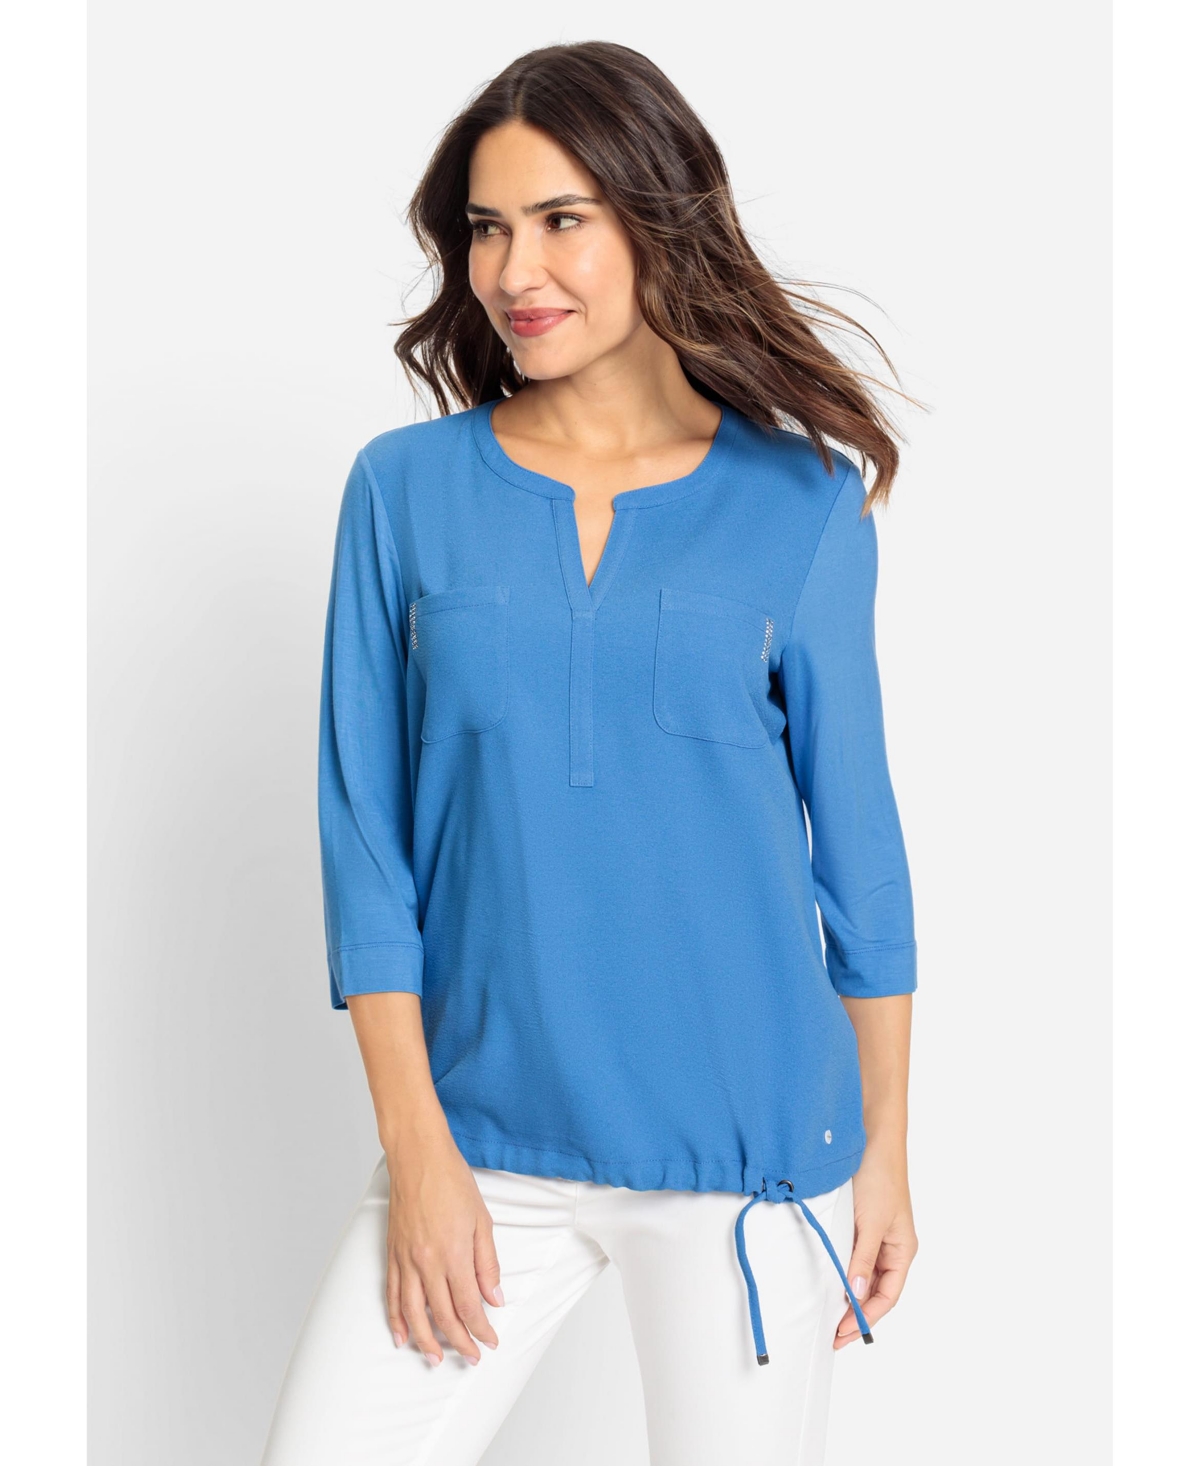 Women's Mixed Media Tunic - Lapis blue